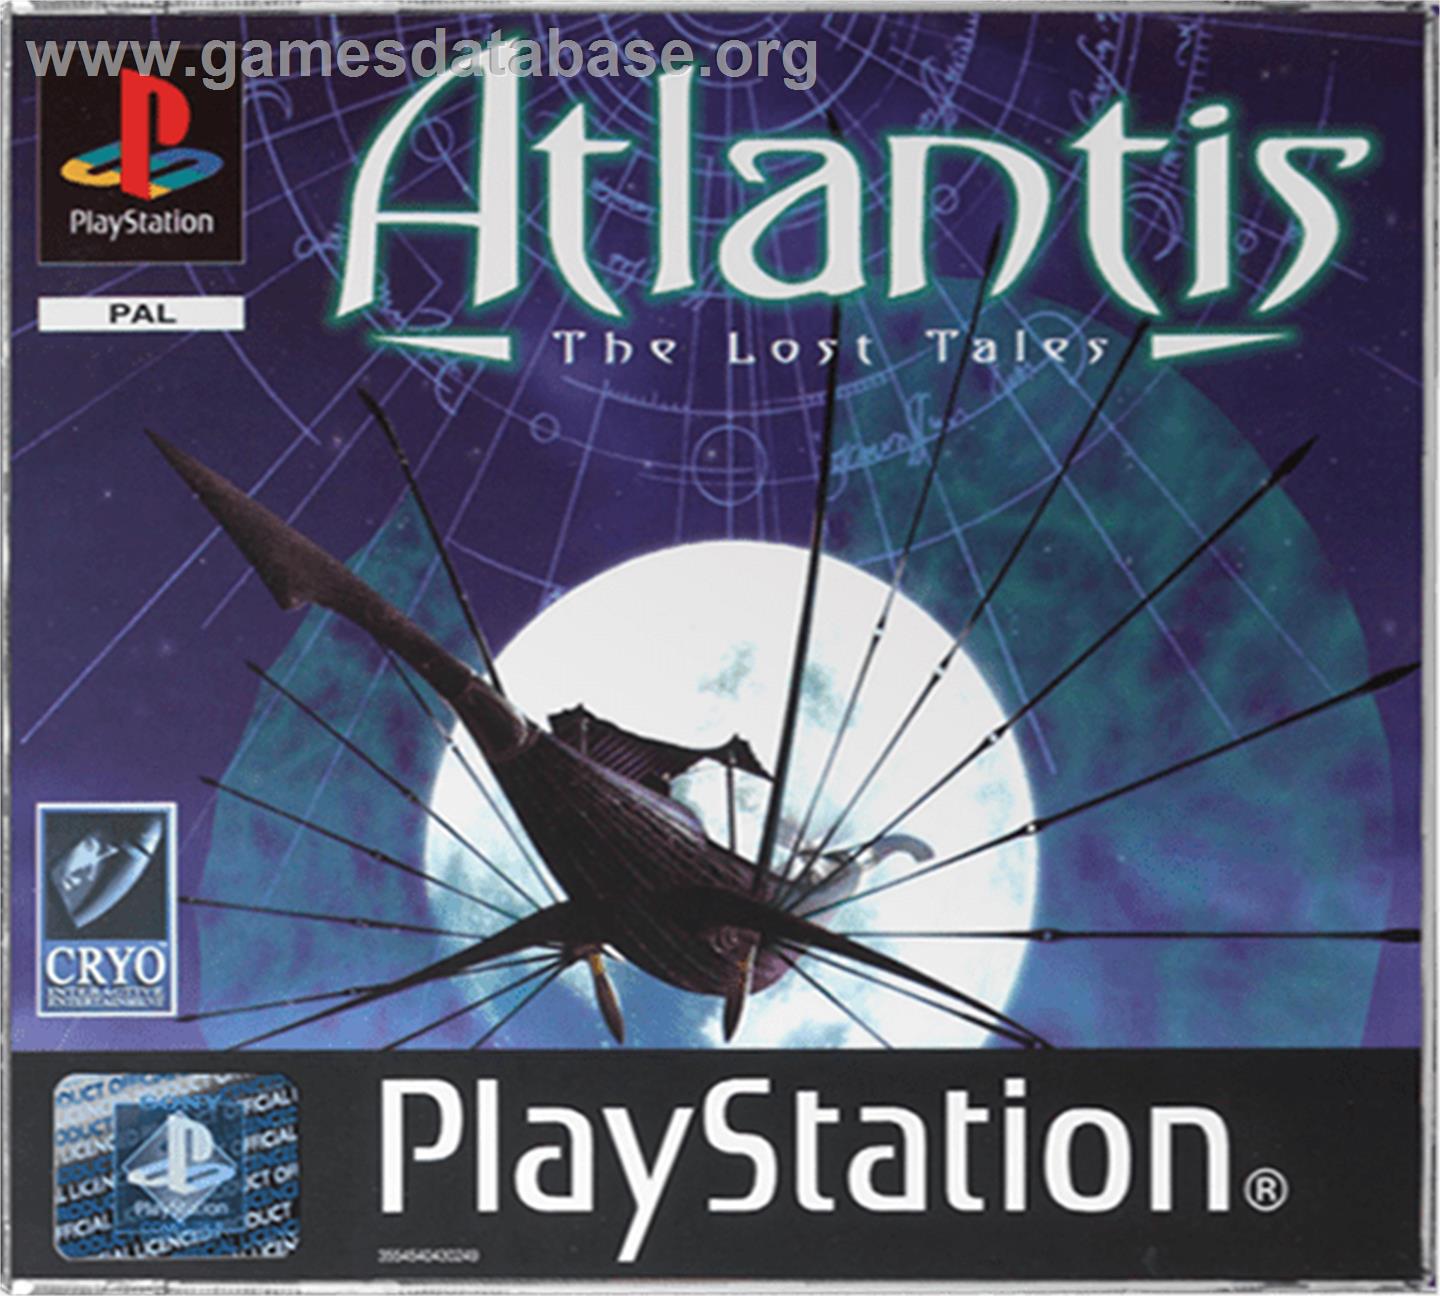 Atlantis: The Lost Tales - Sony Playstation - Artwork - Box